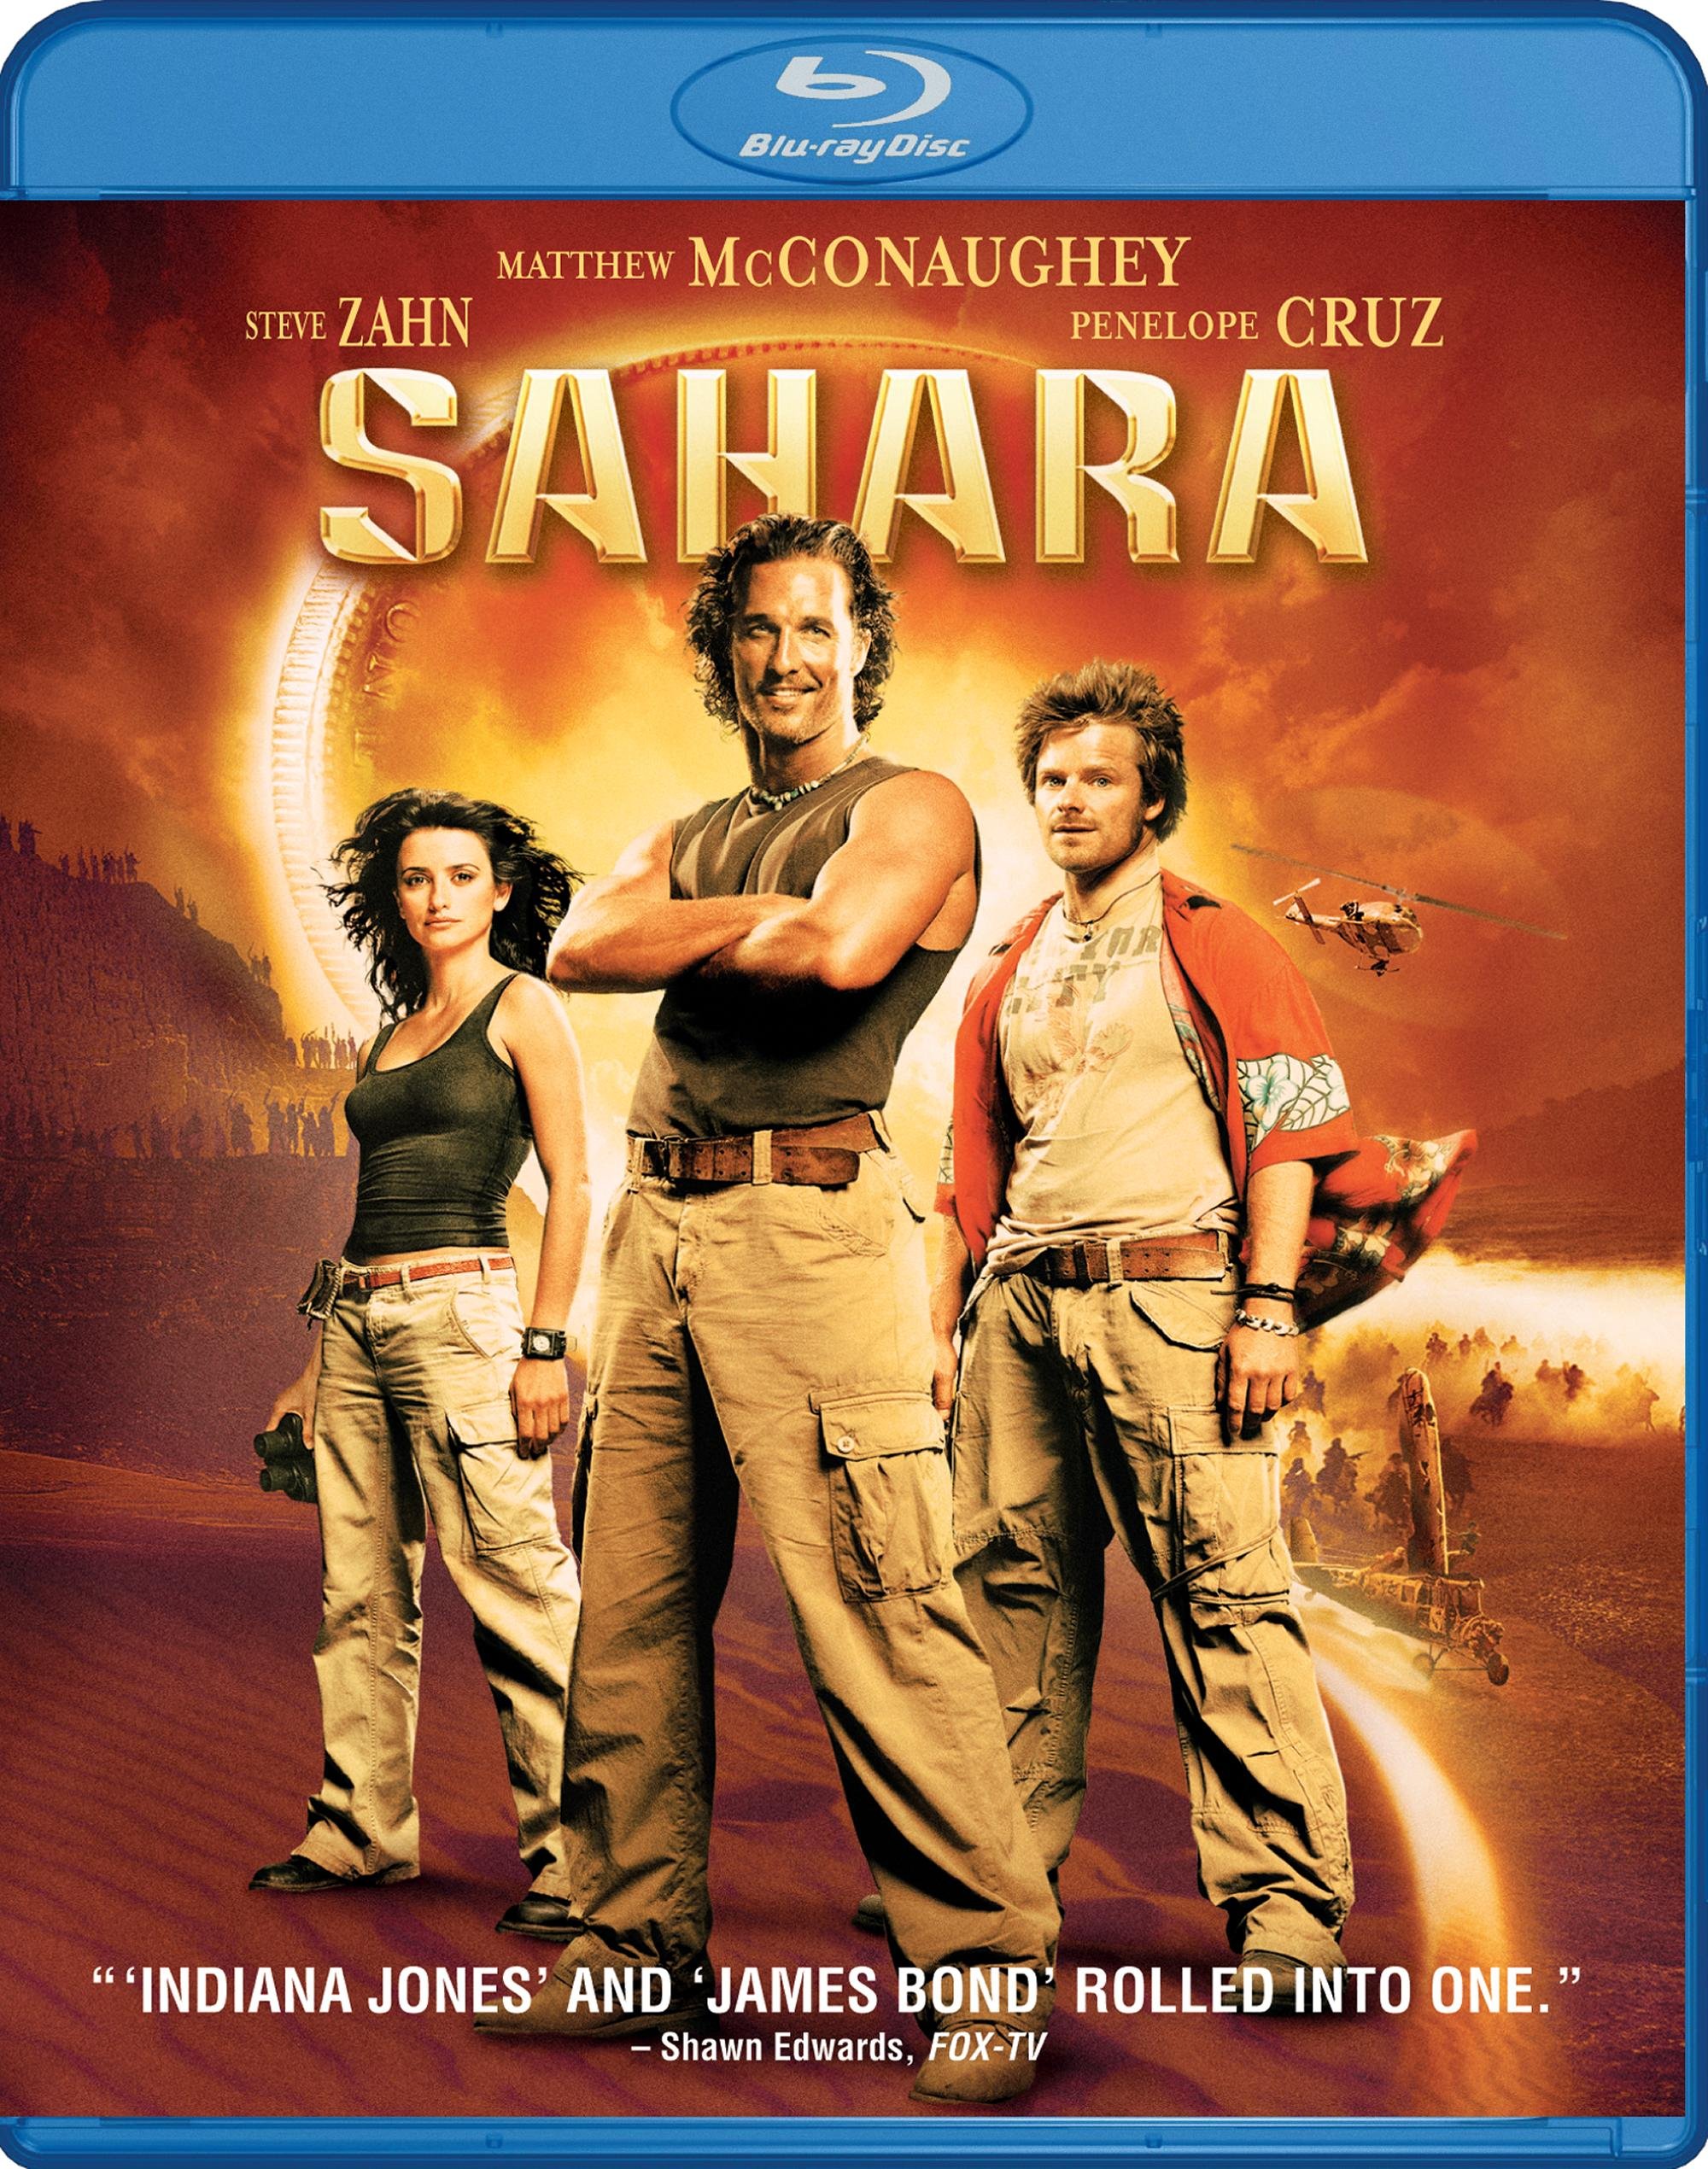 Sahara DVD Release Date August 30, 2005